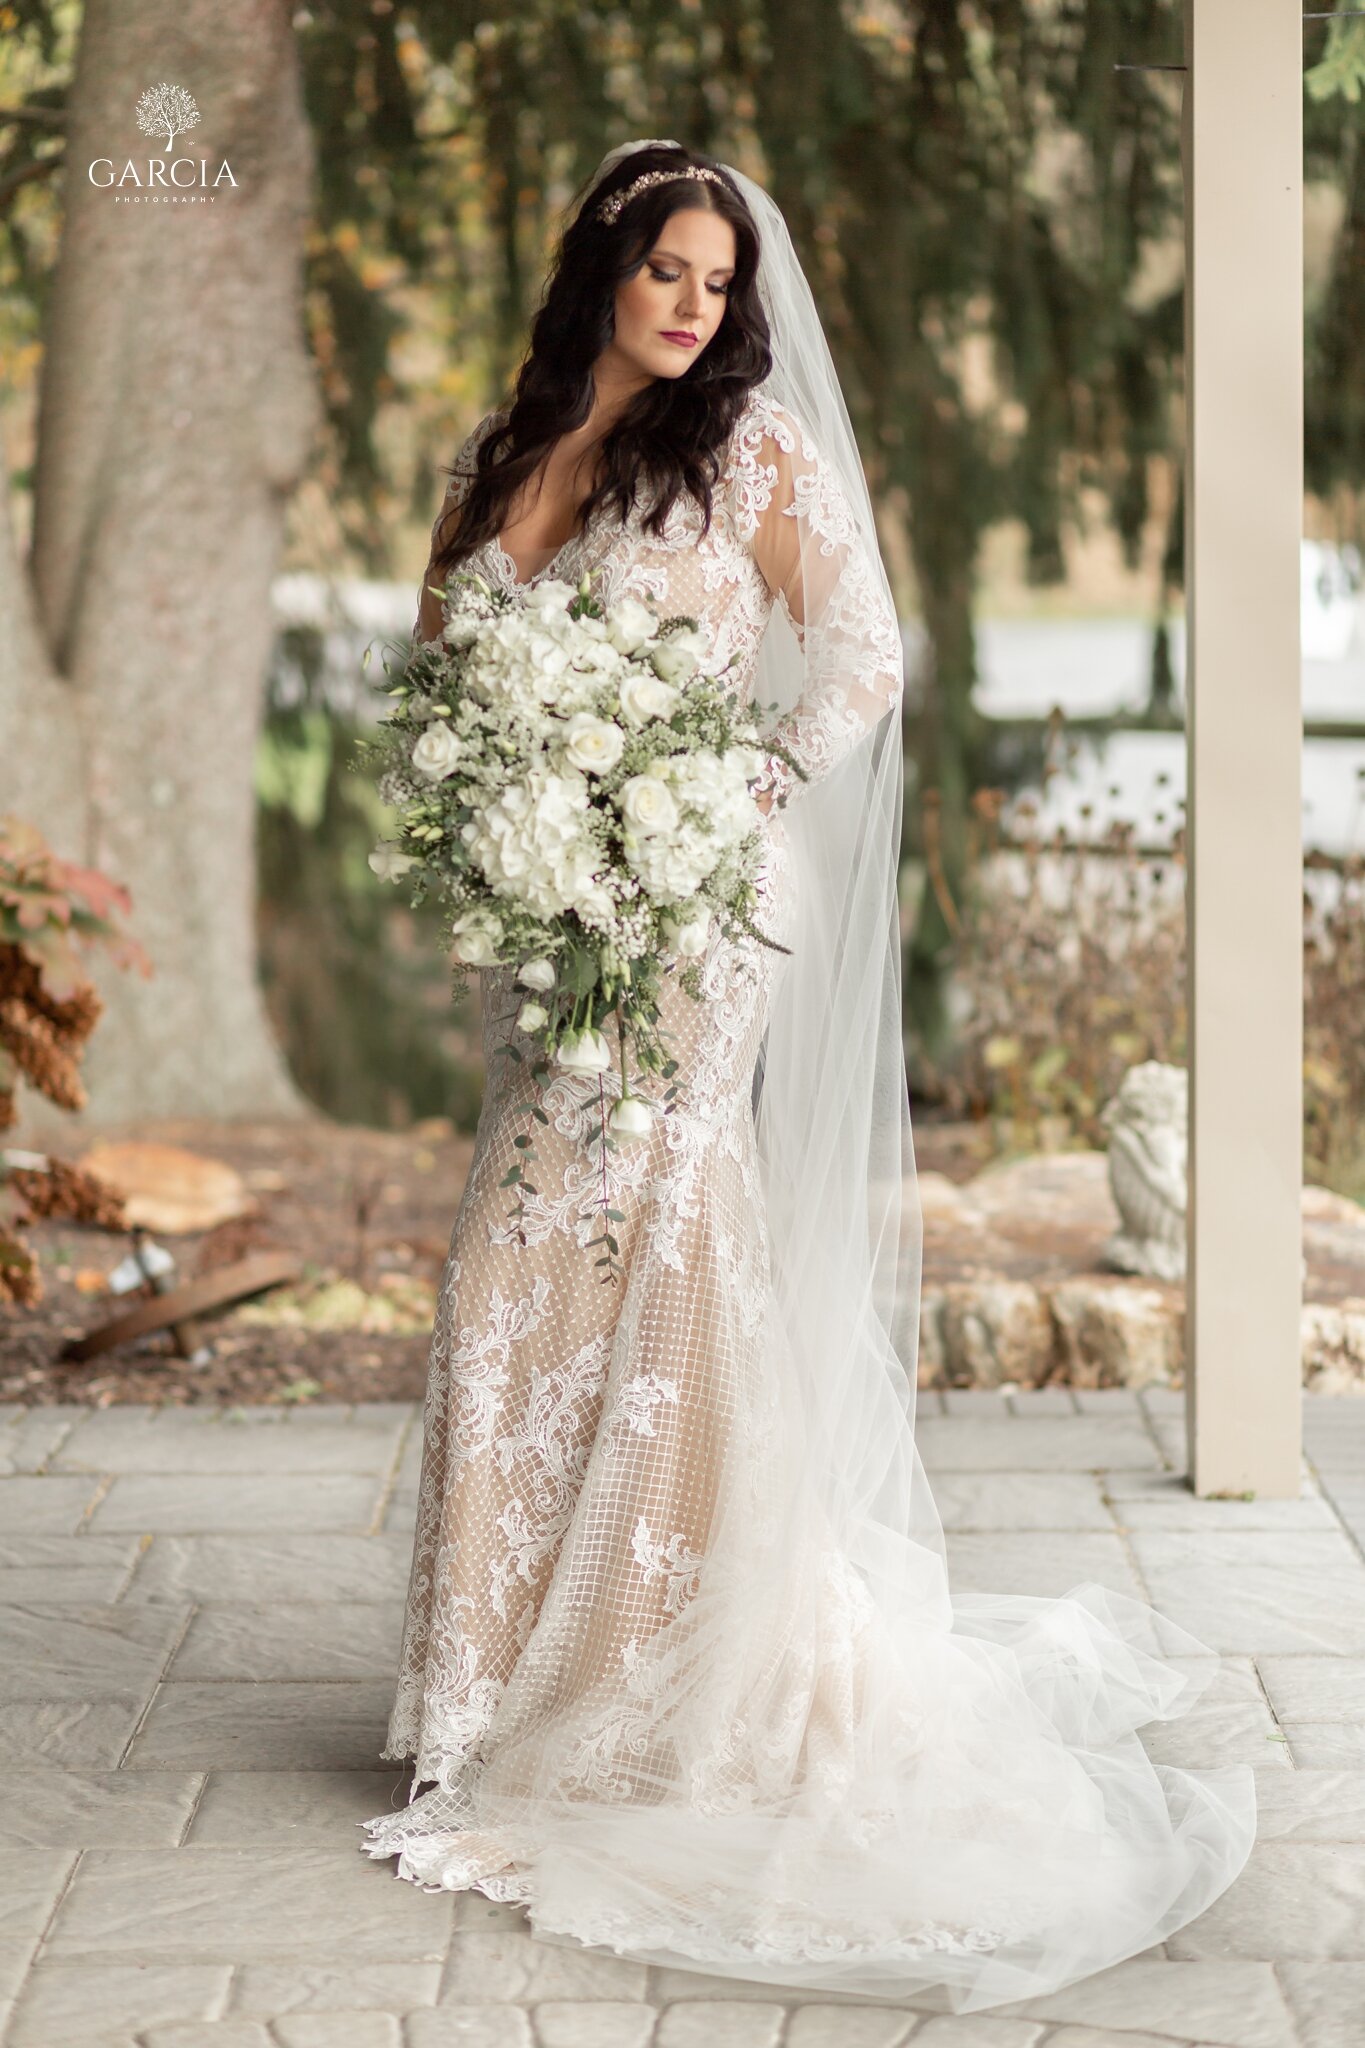 Heather-Brent-Wedding-Garcia-Photography-7578.jpg